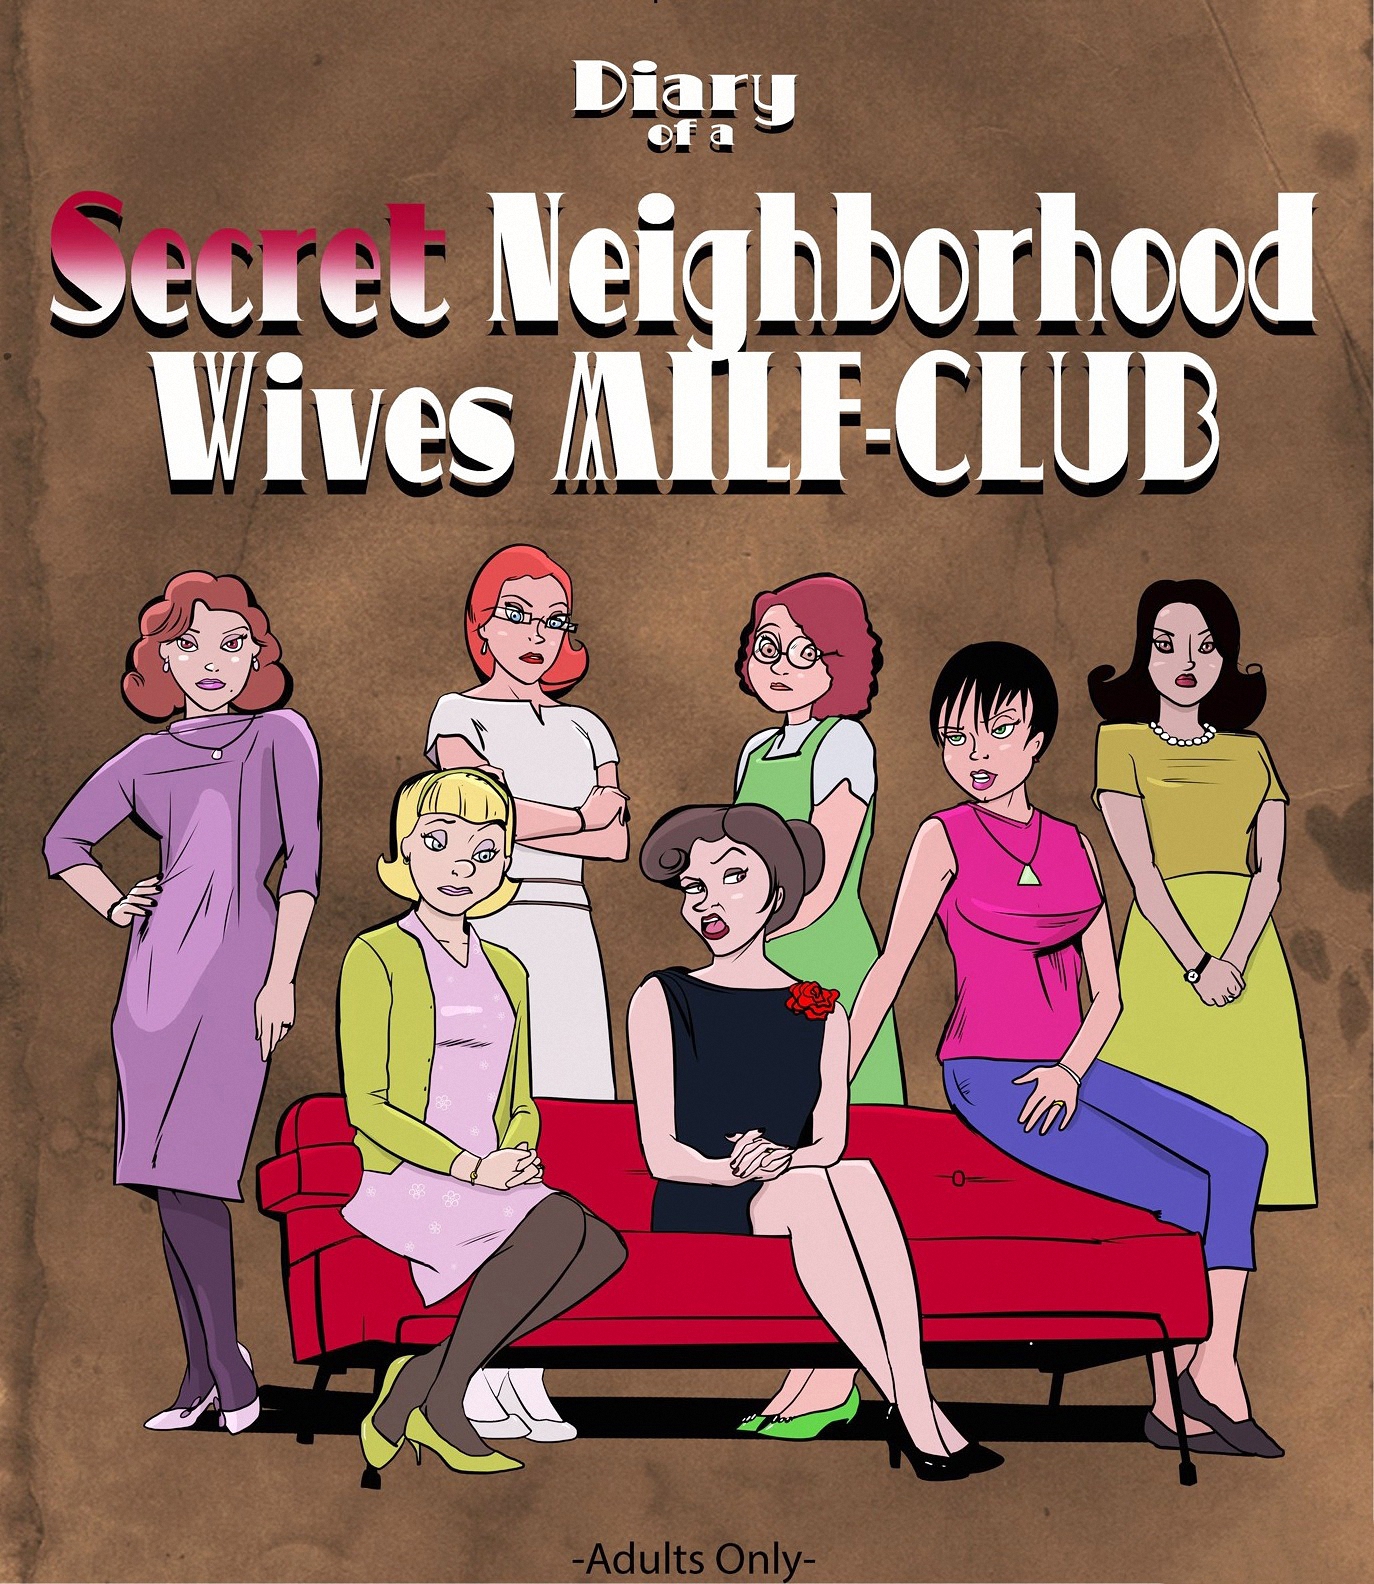 Diary of Secret Neighborhood - Wives Milf Club